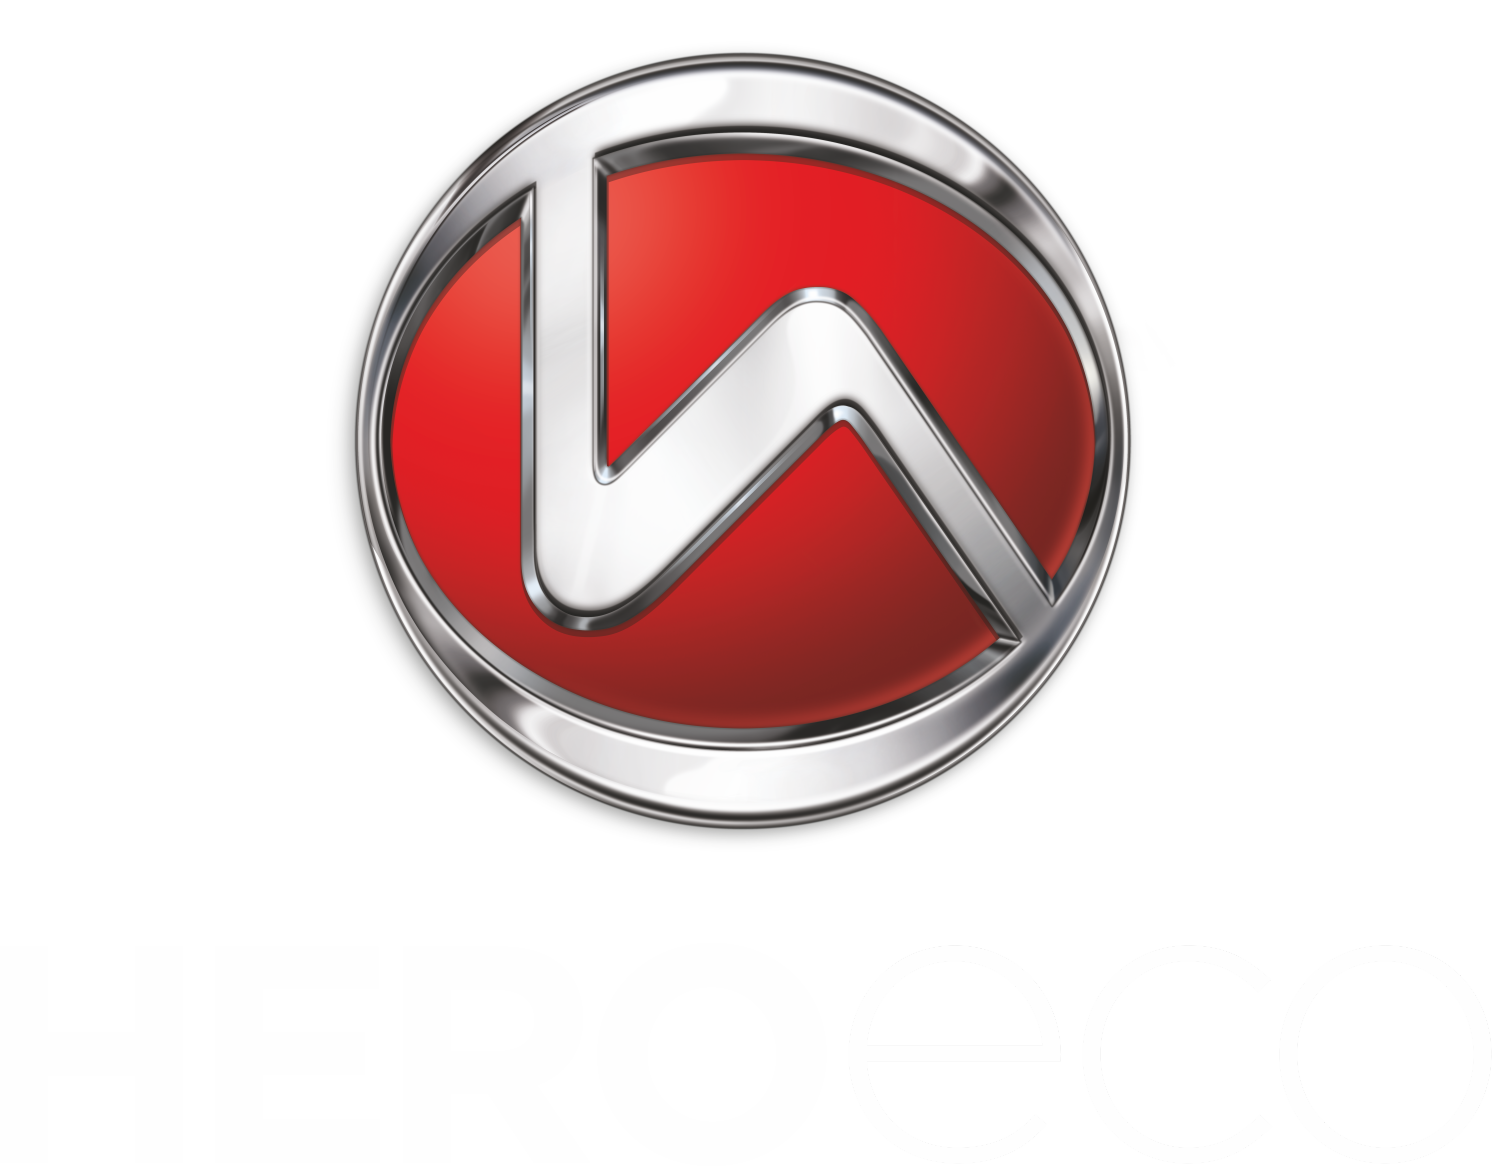 Heroecotech